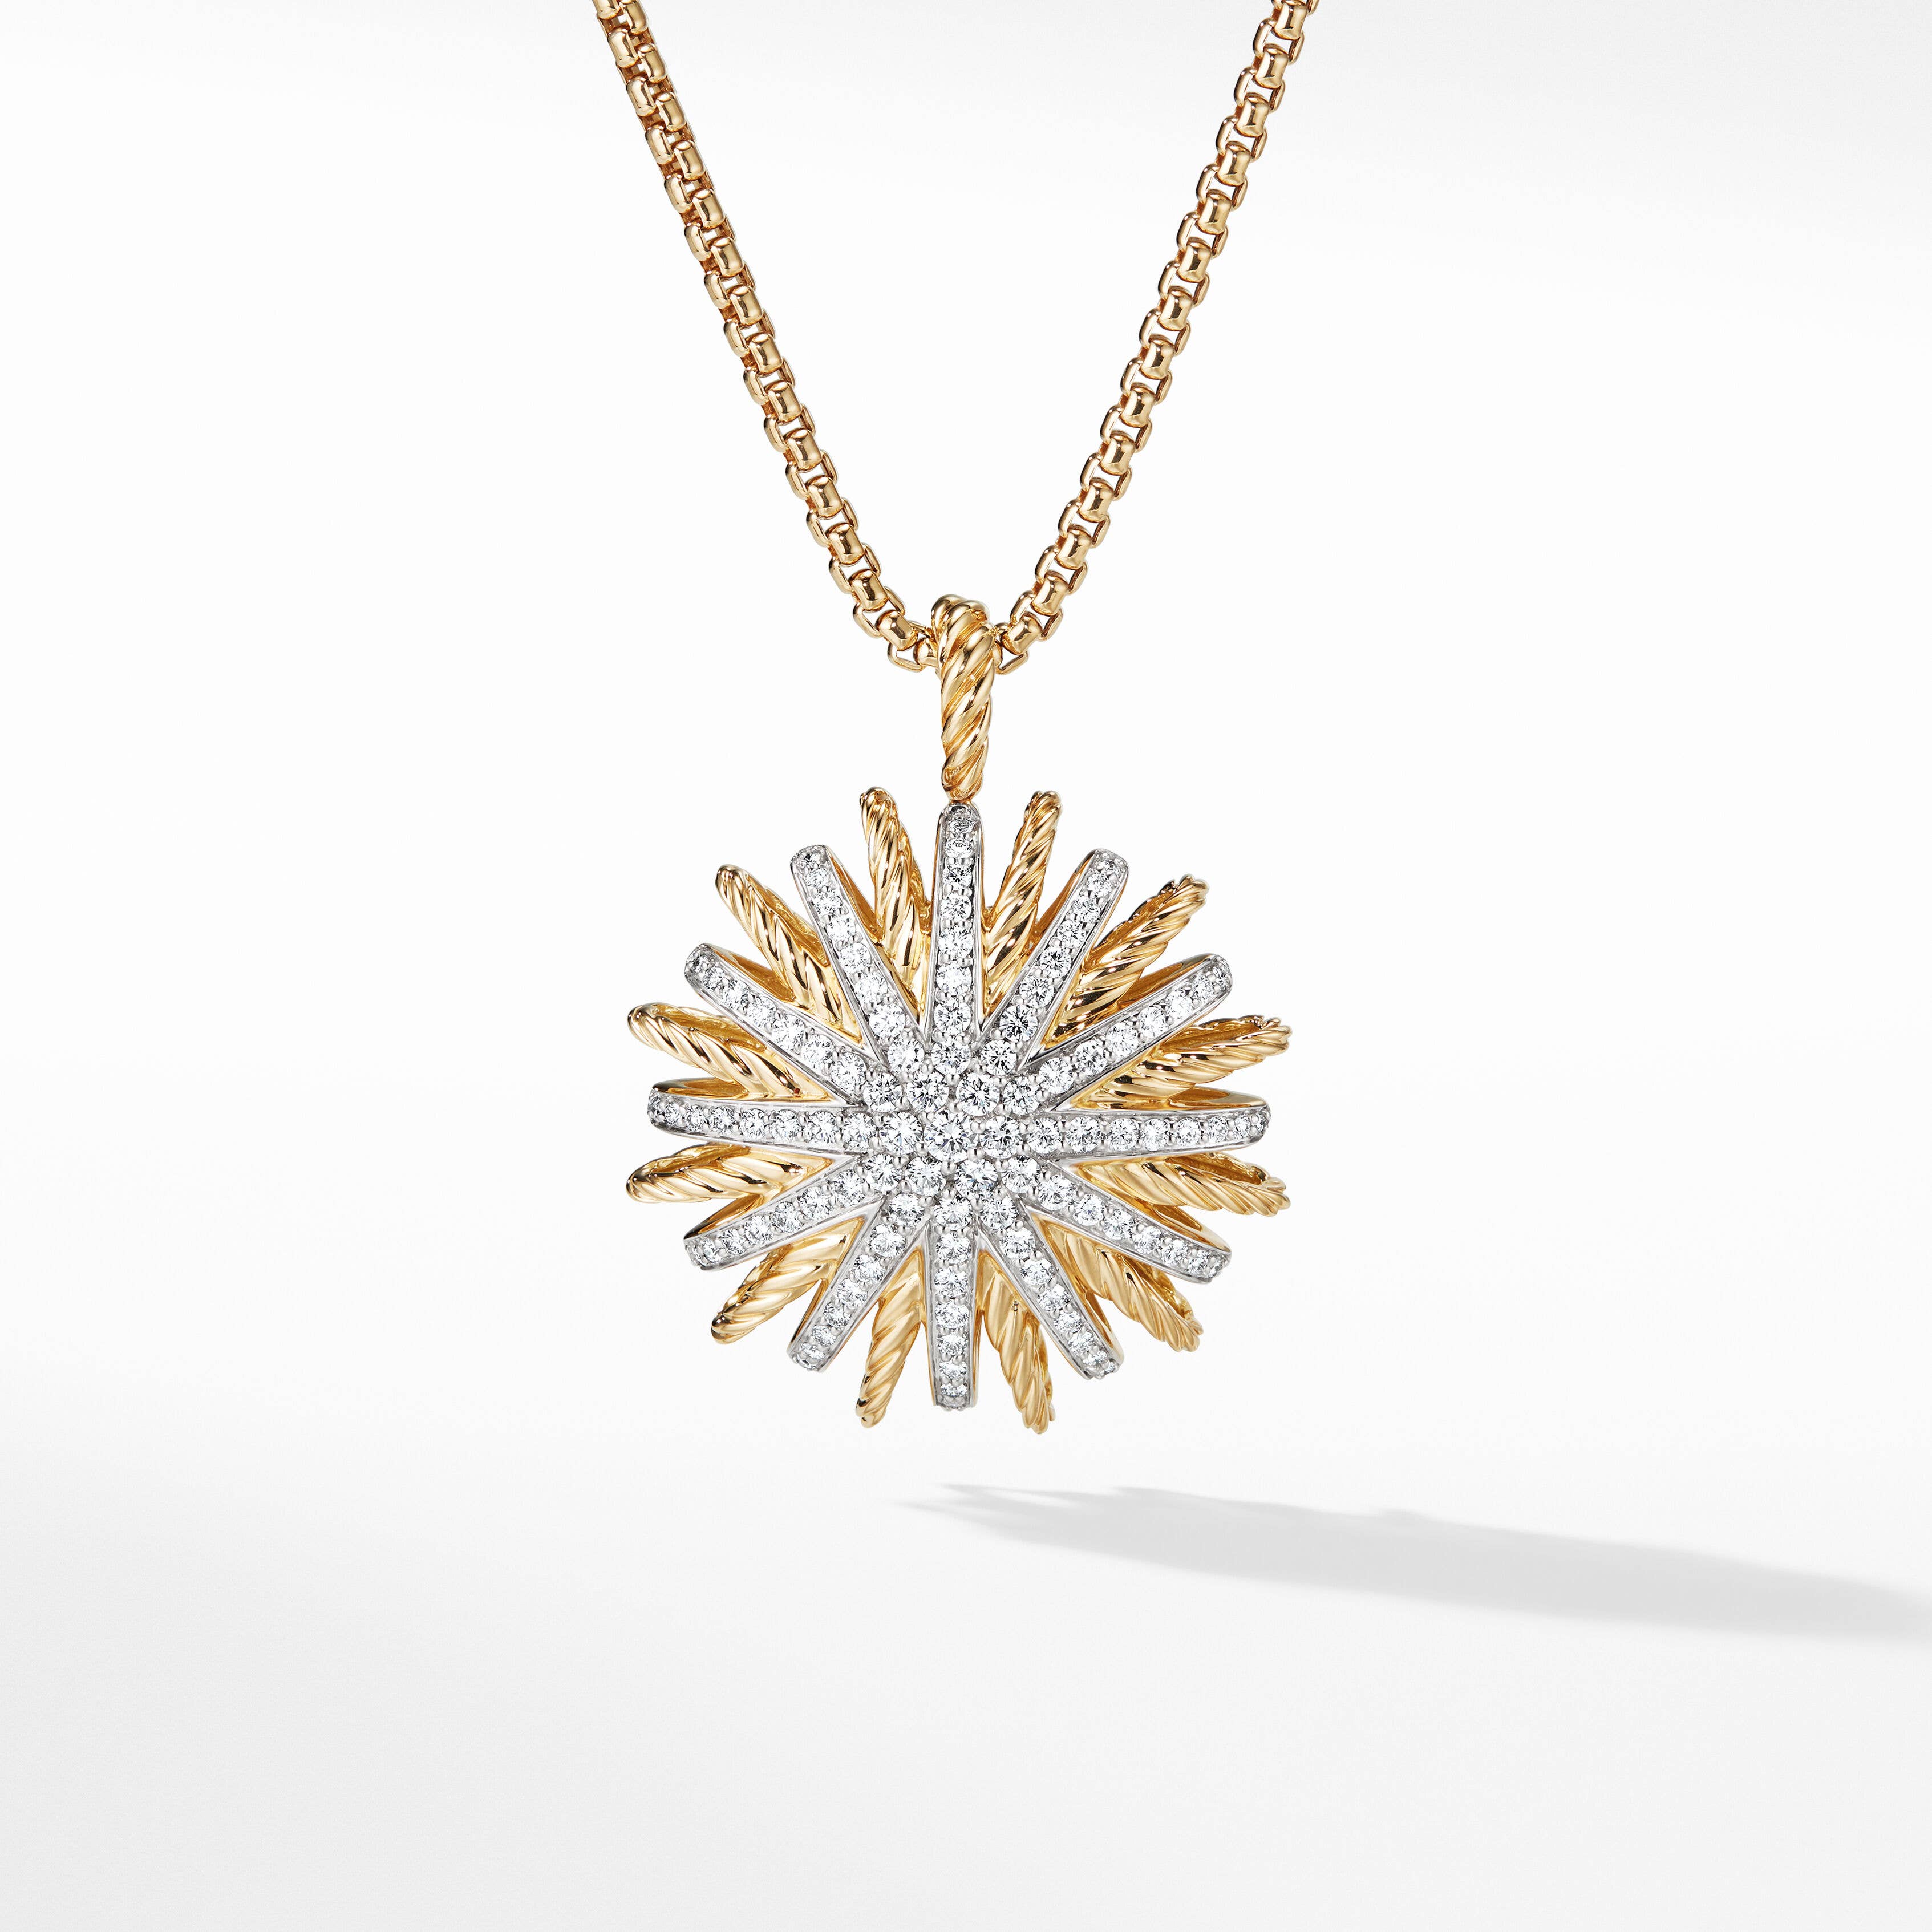 Starburst Pendant in 18K Yellow Gold with Pavé Diamonds